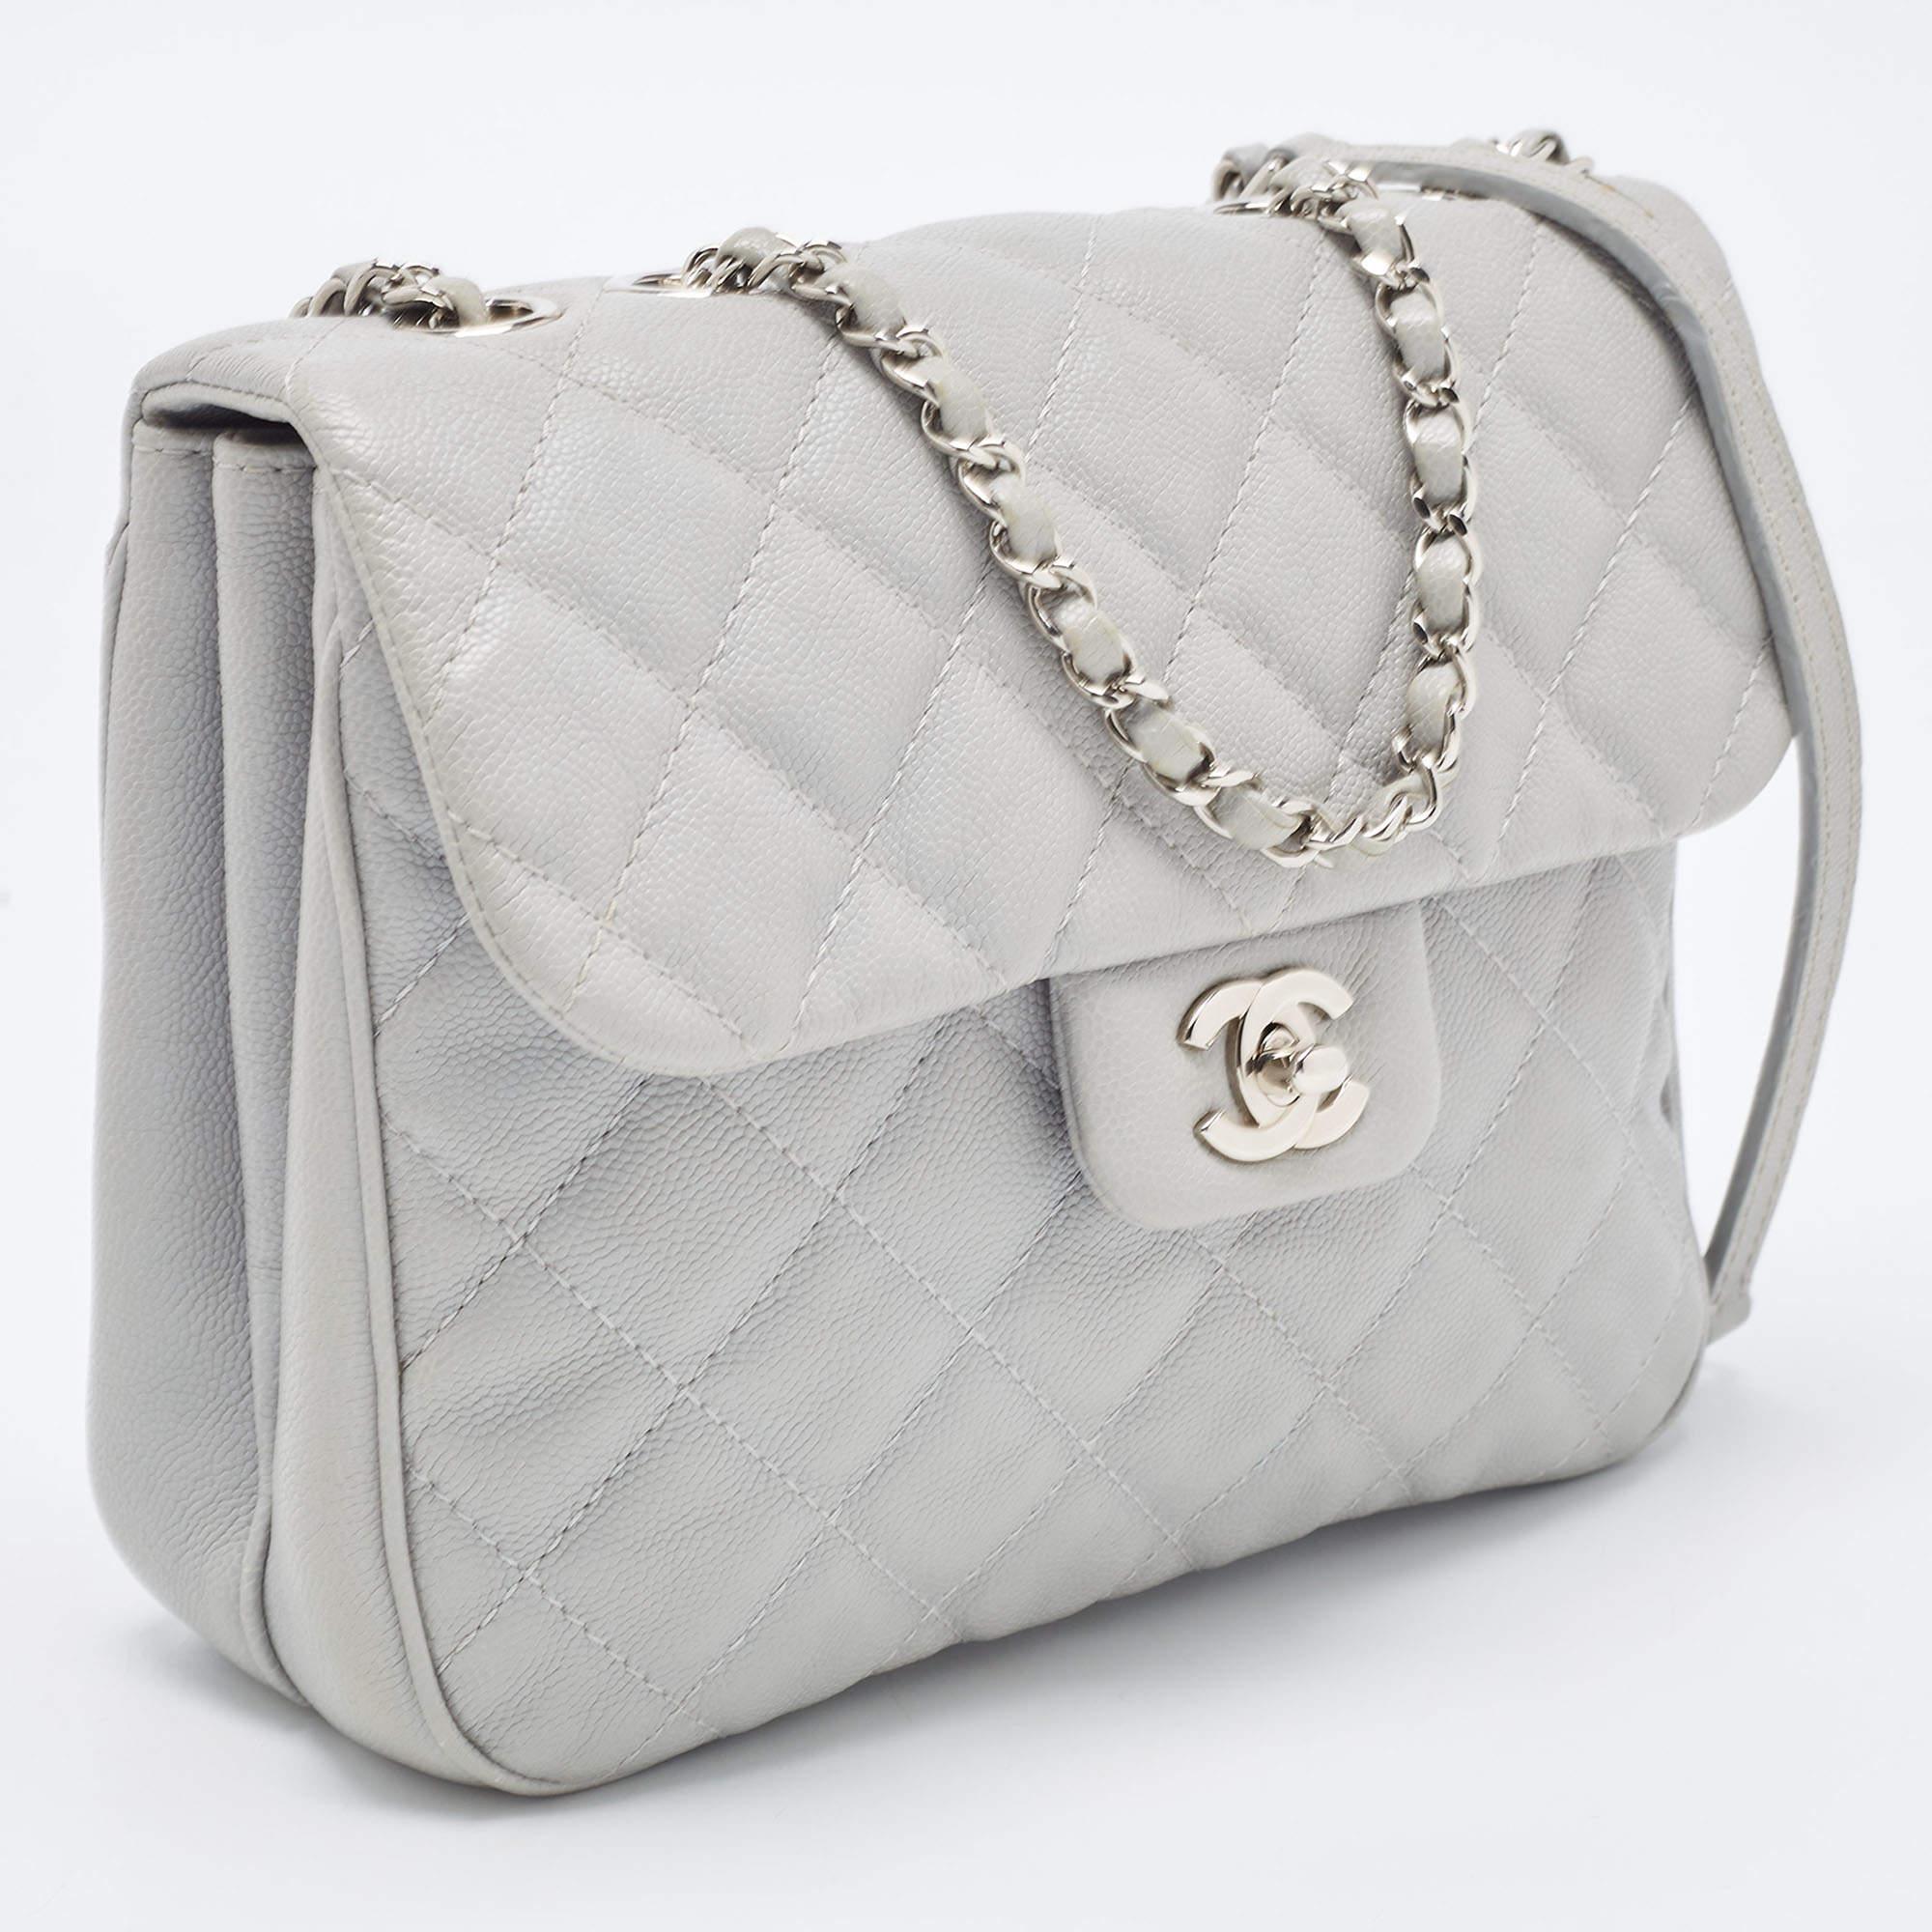 Chanel Grey Caviar Leather Medium Urban Companion Flap Bag In Good Condition For Sale In Dubai, Al Qouz 2